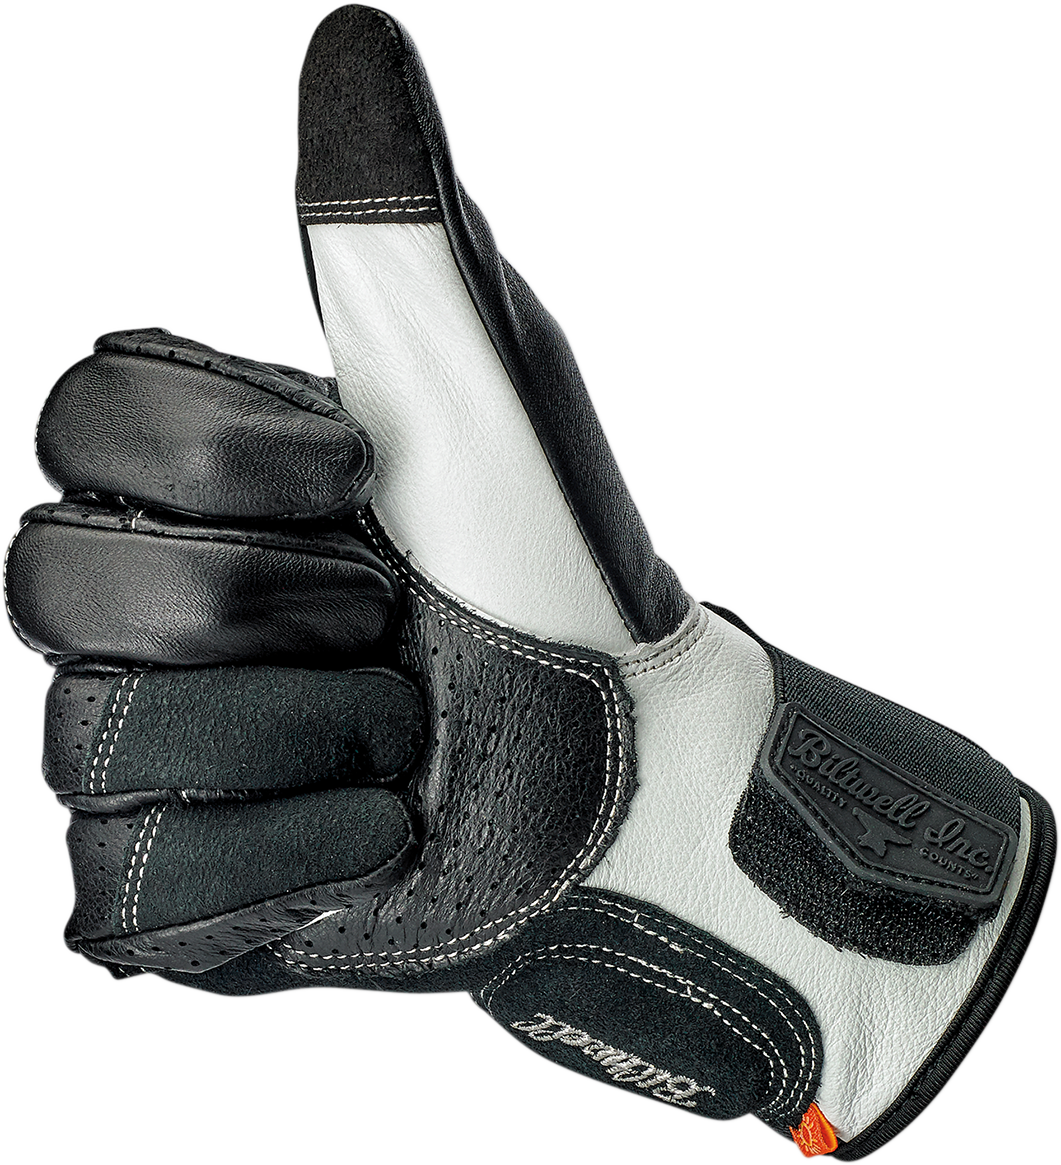 BILTWELL Borrego Gloves - Black/Cement - Large 1506-0104-304